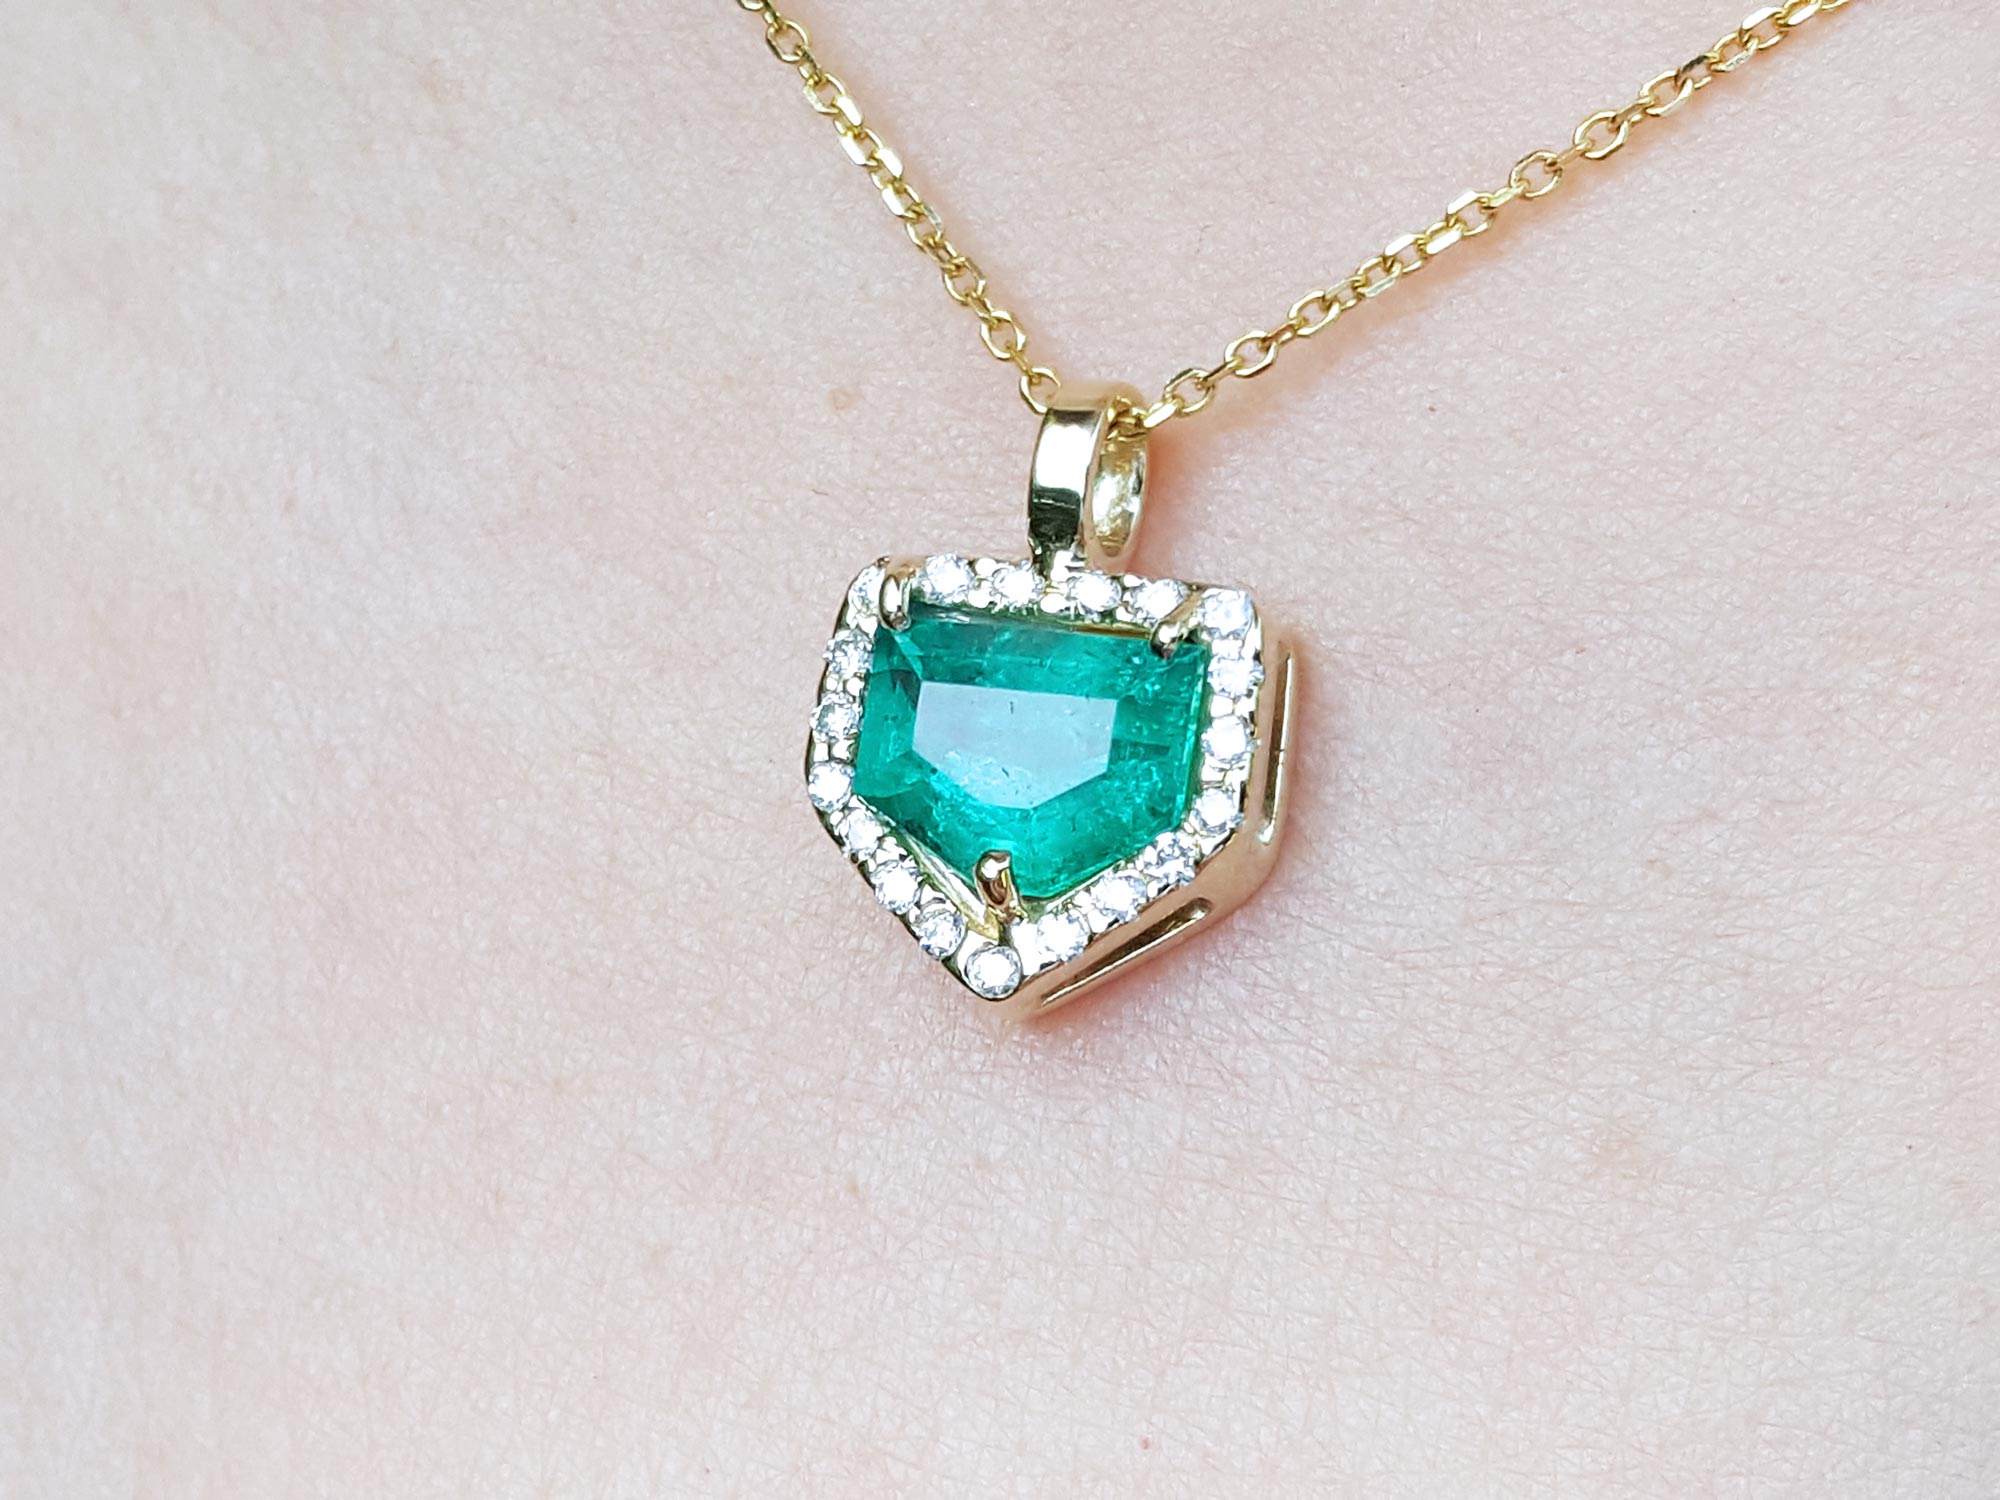 Real Muzo emerald pendant